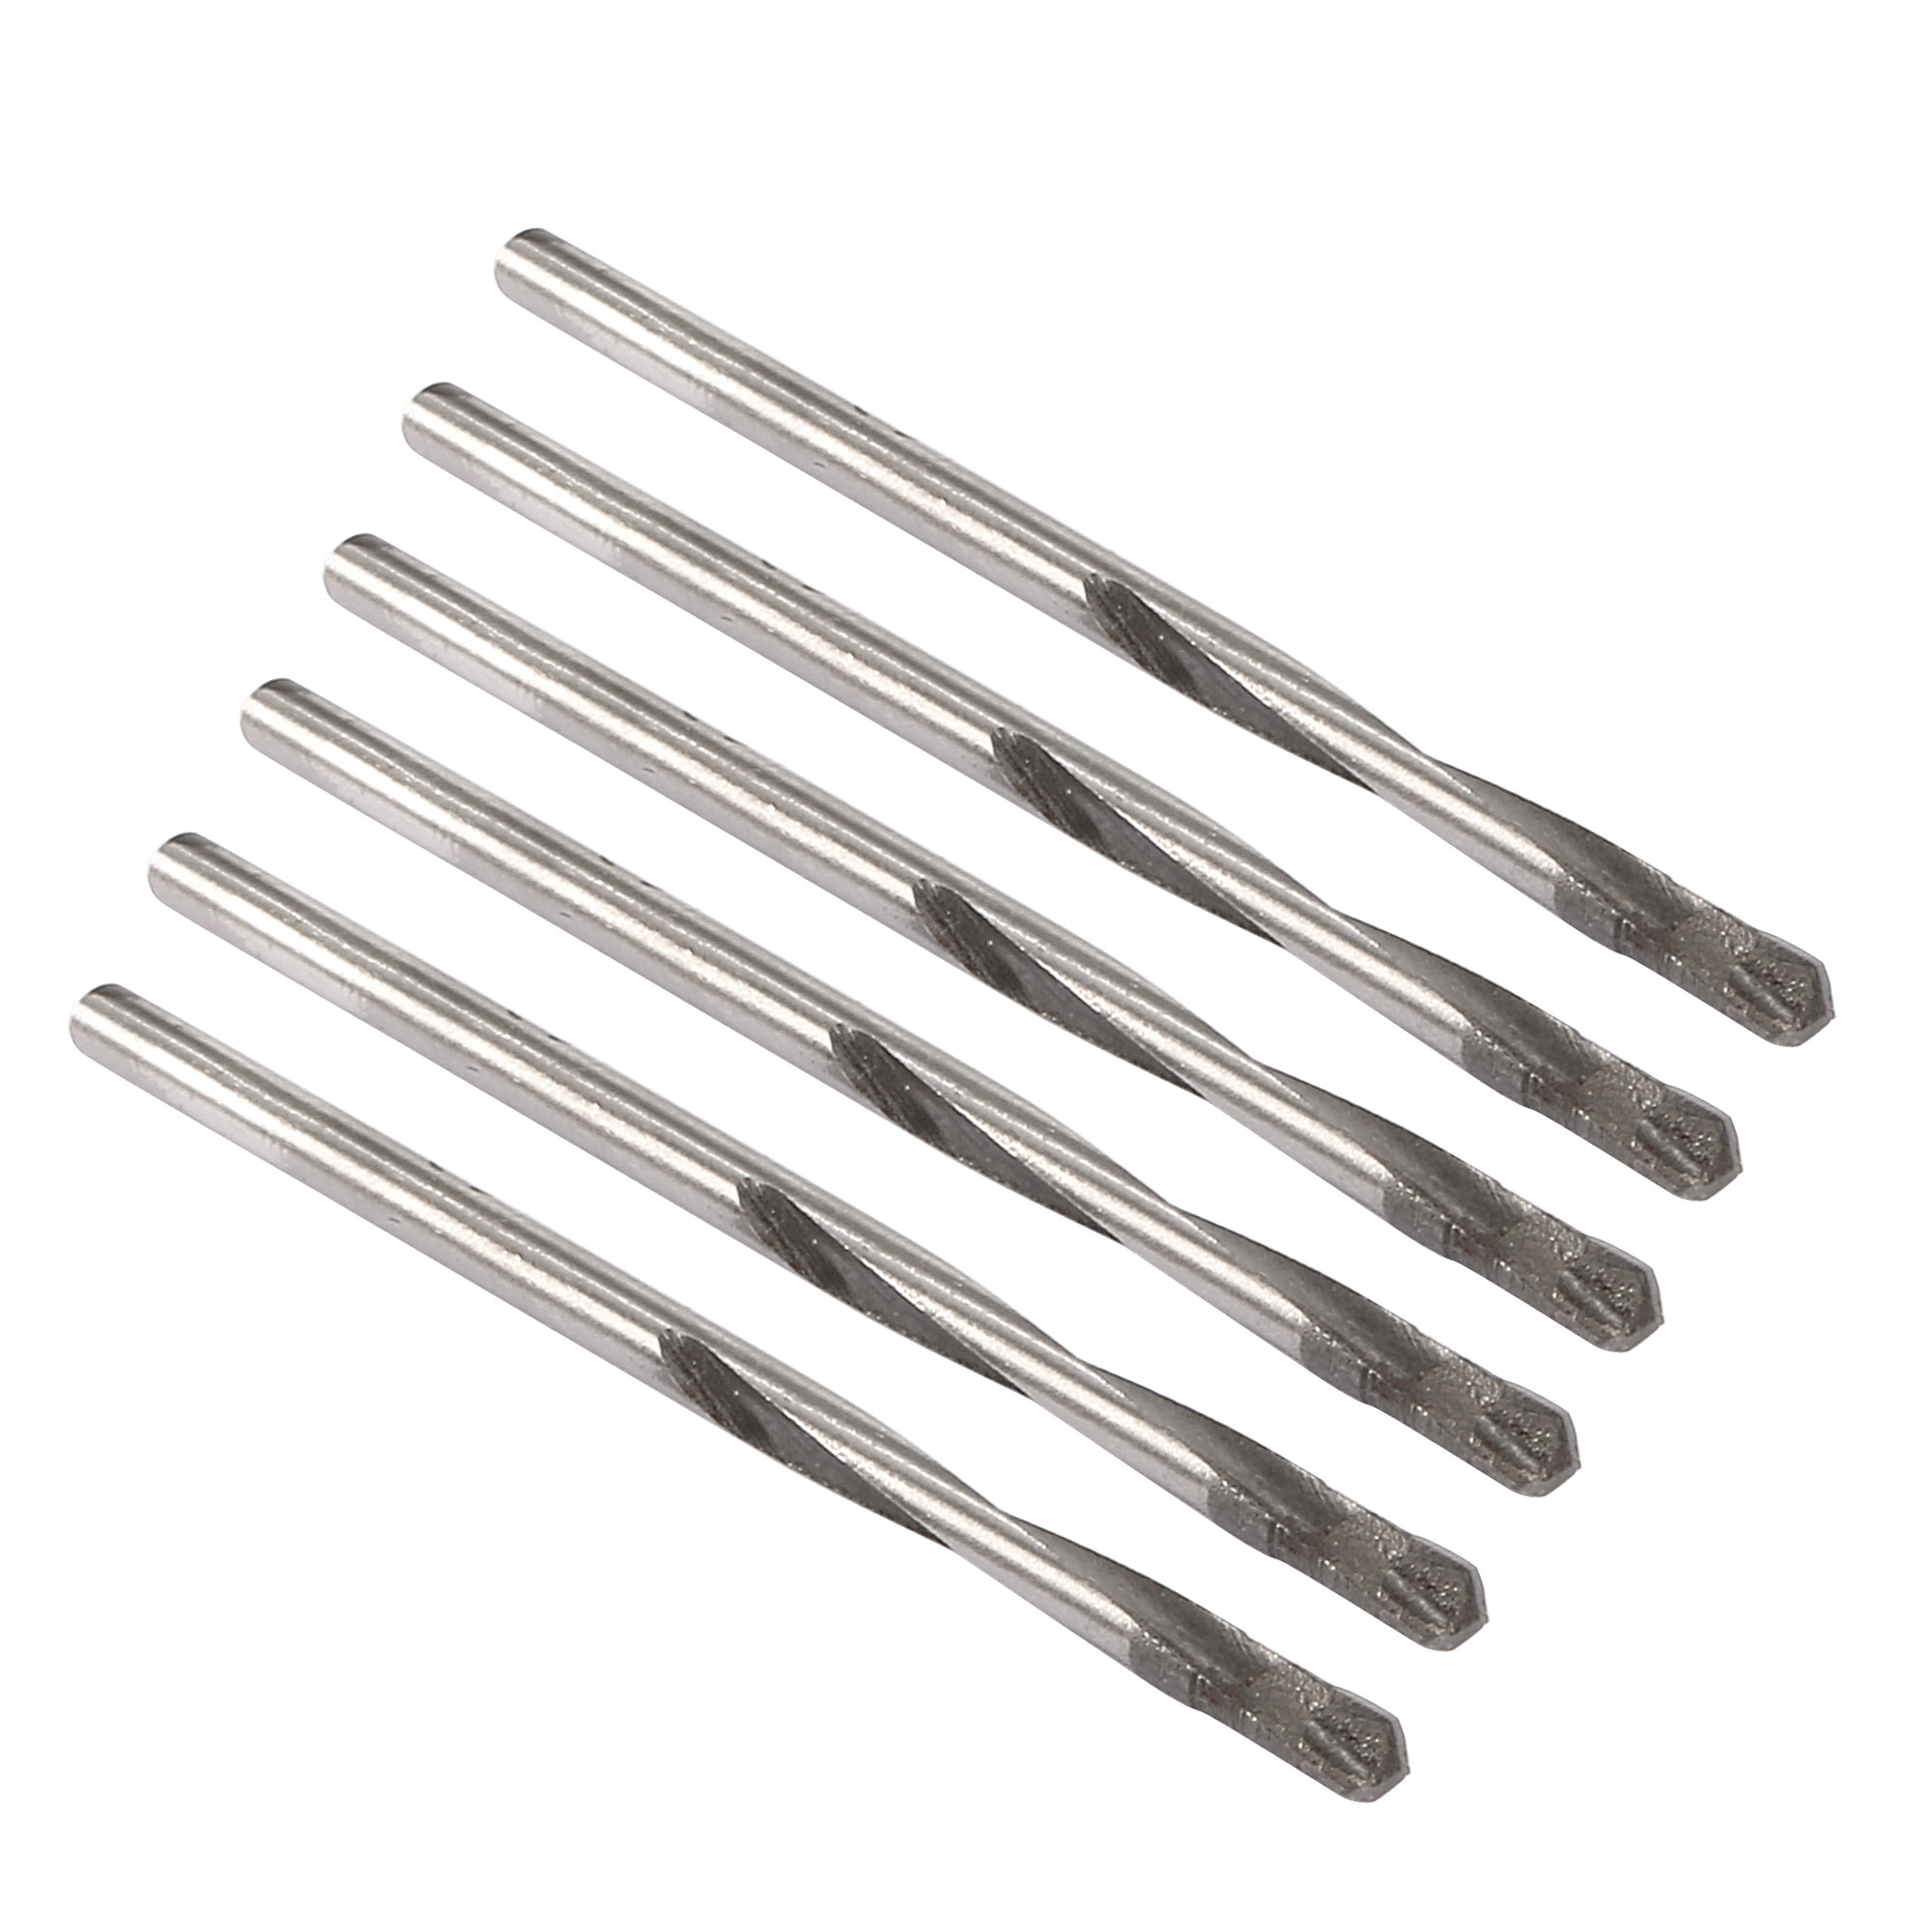 6pc Carbide Twist Drill Bits for Metals 60mm